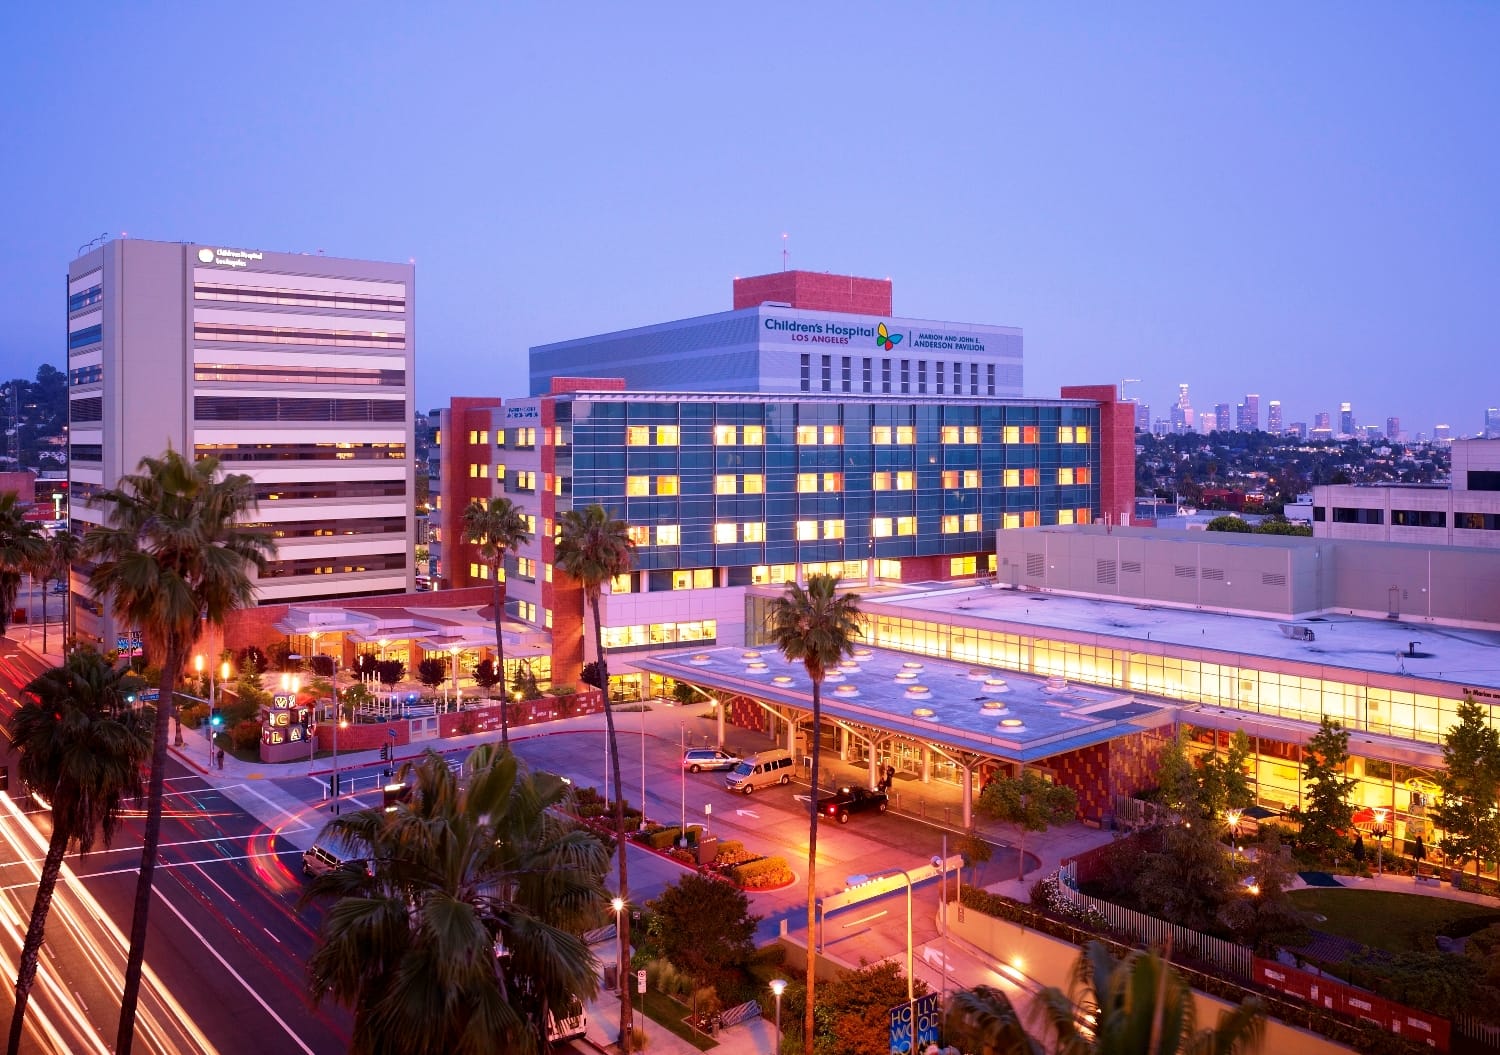 Children's Hospital Los Angeles at Dusk